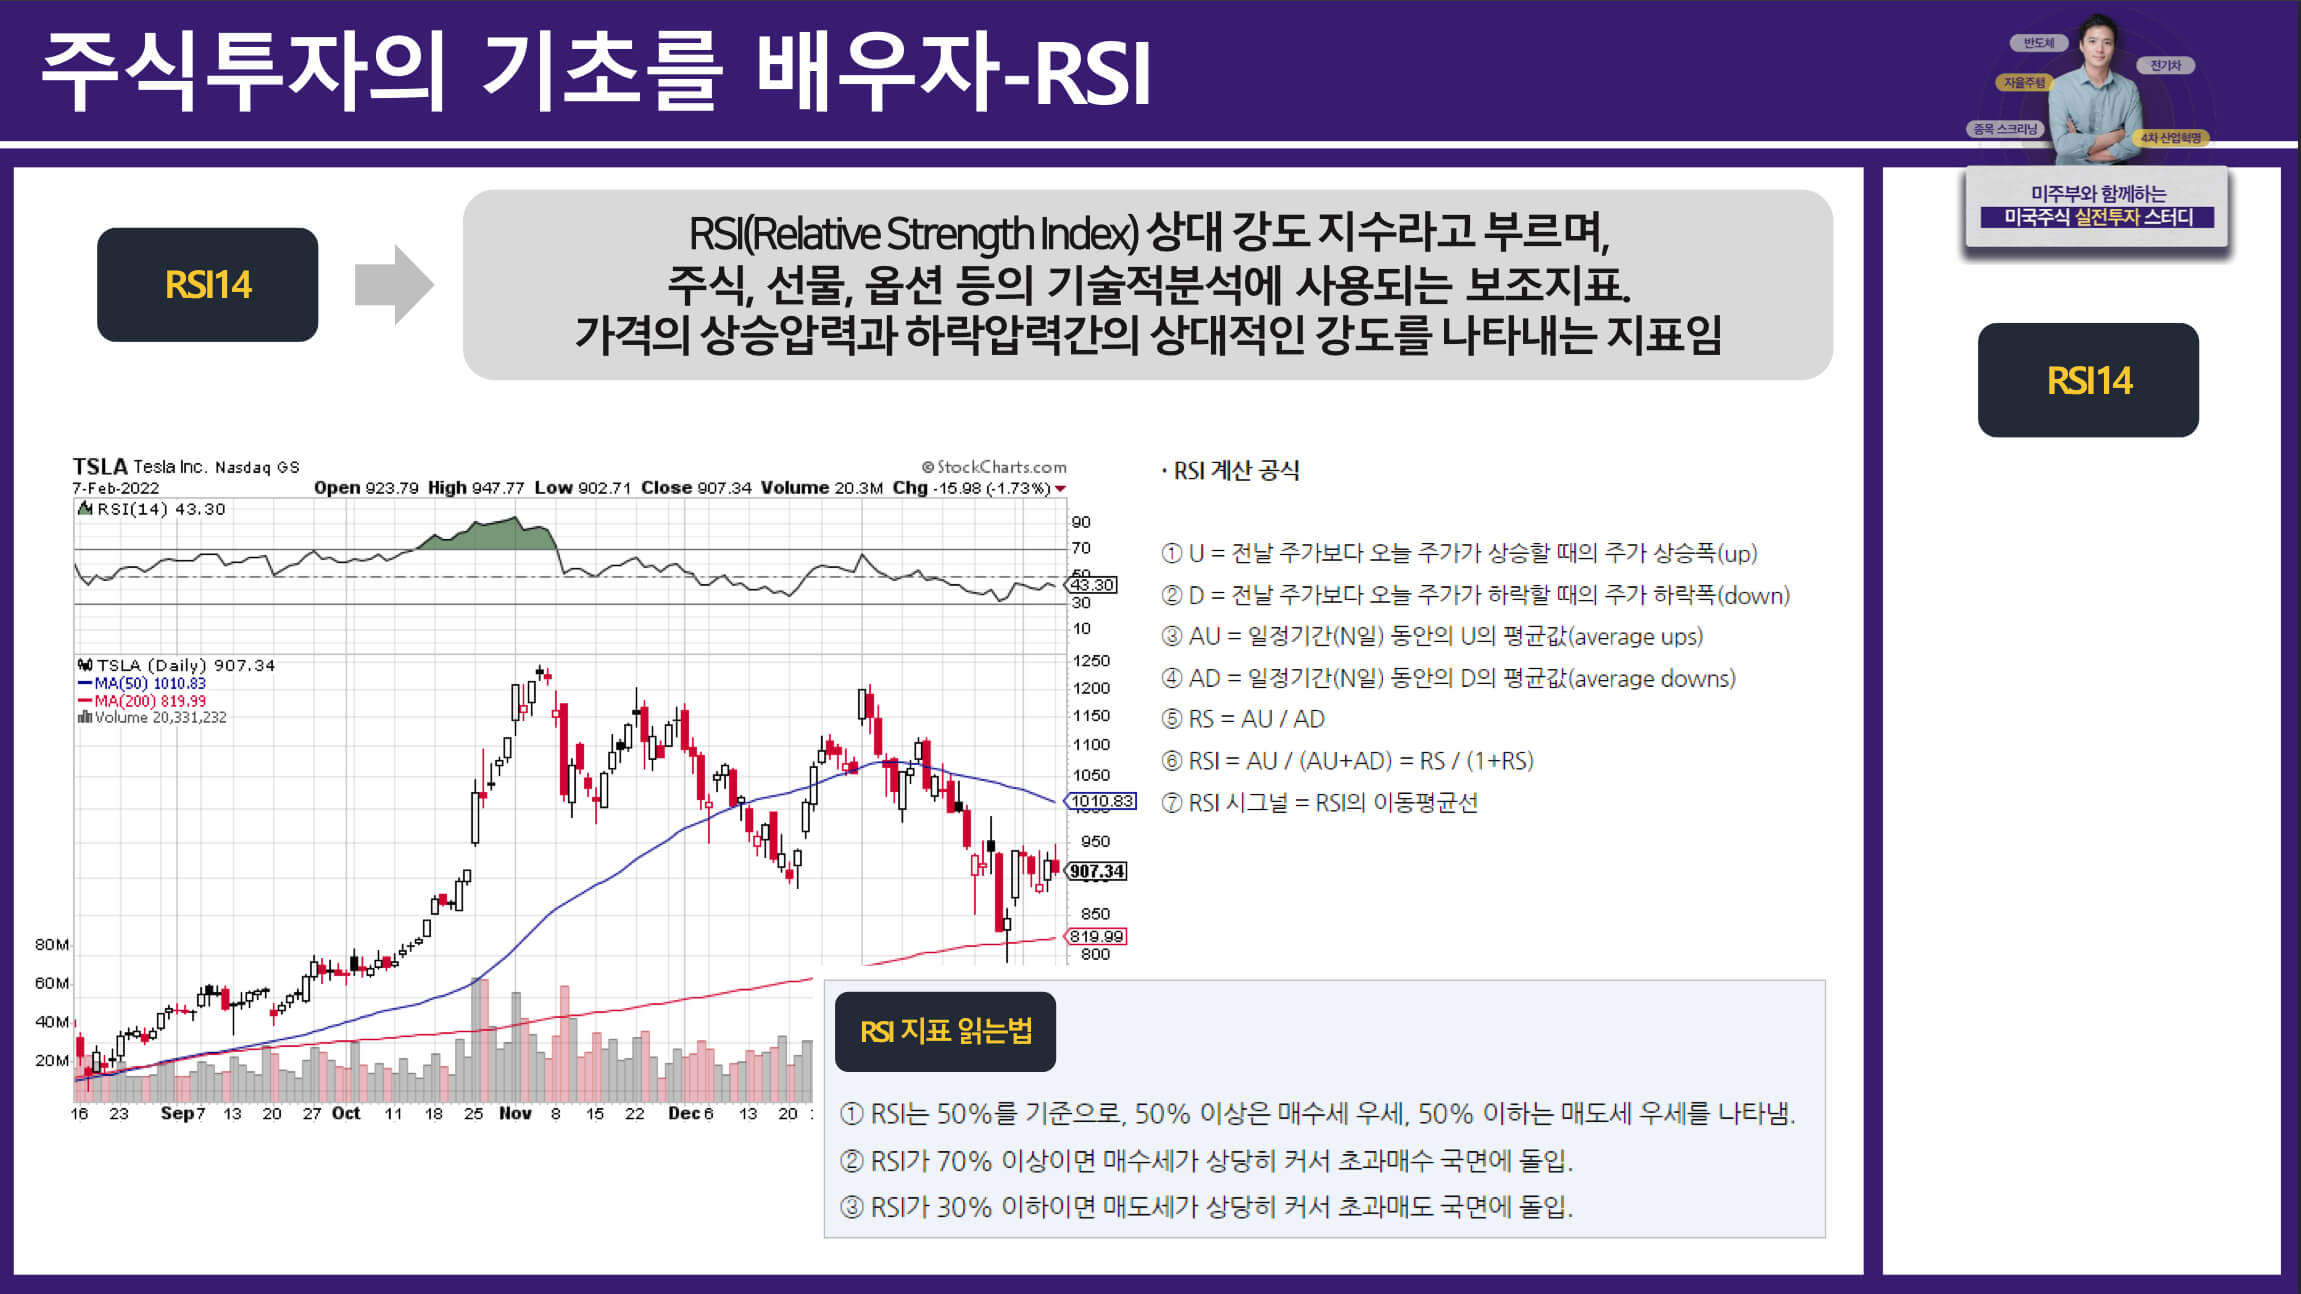 RSI (Relative Strength Index) 상대강도지수